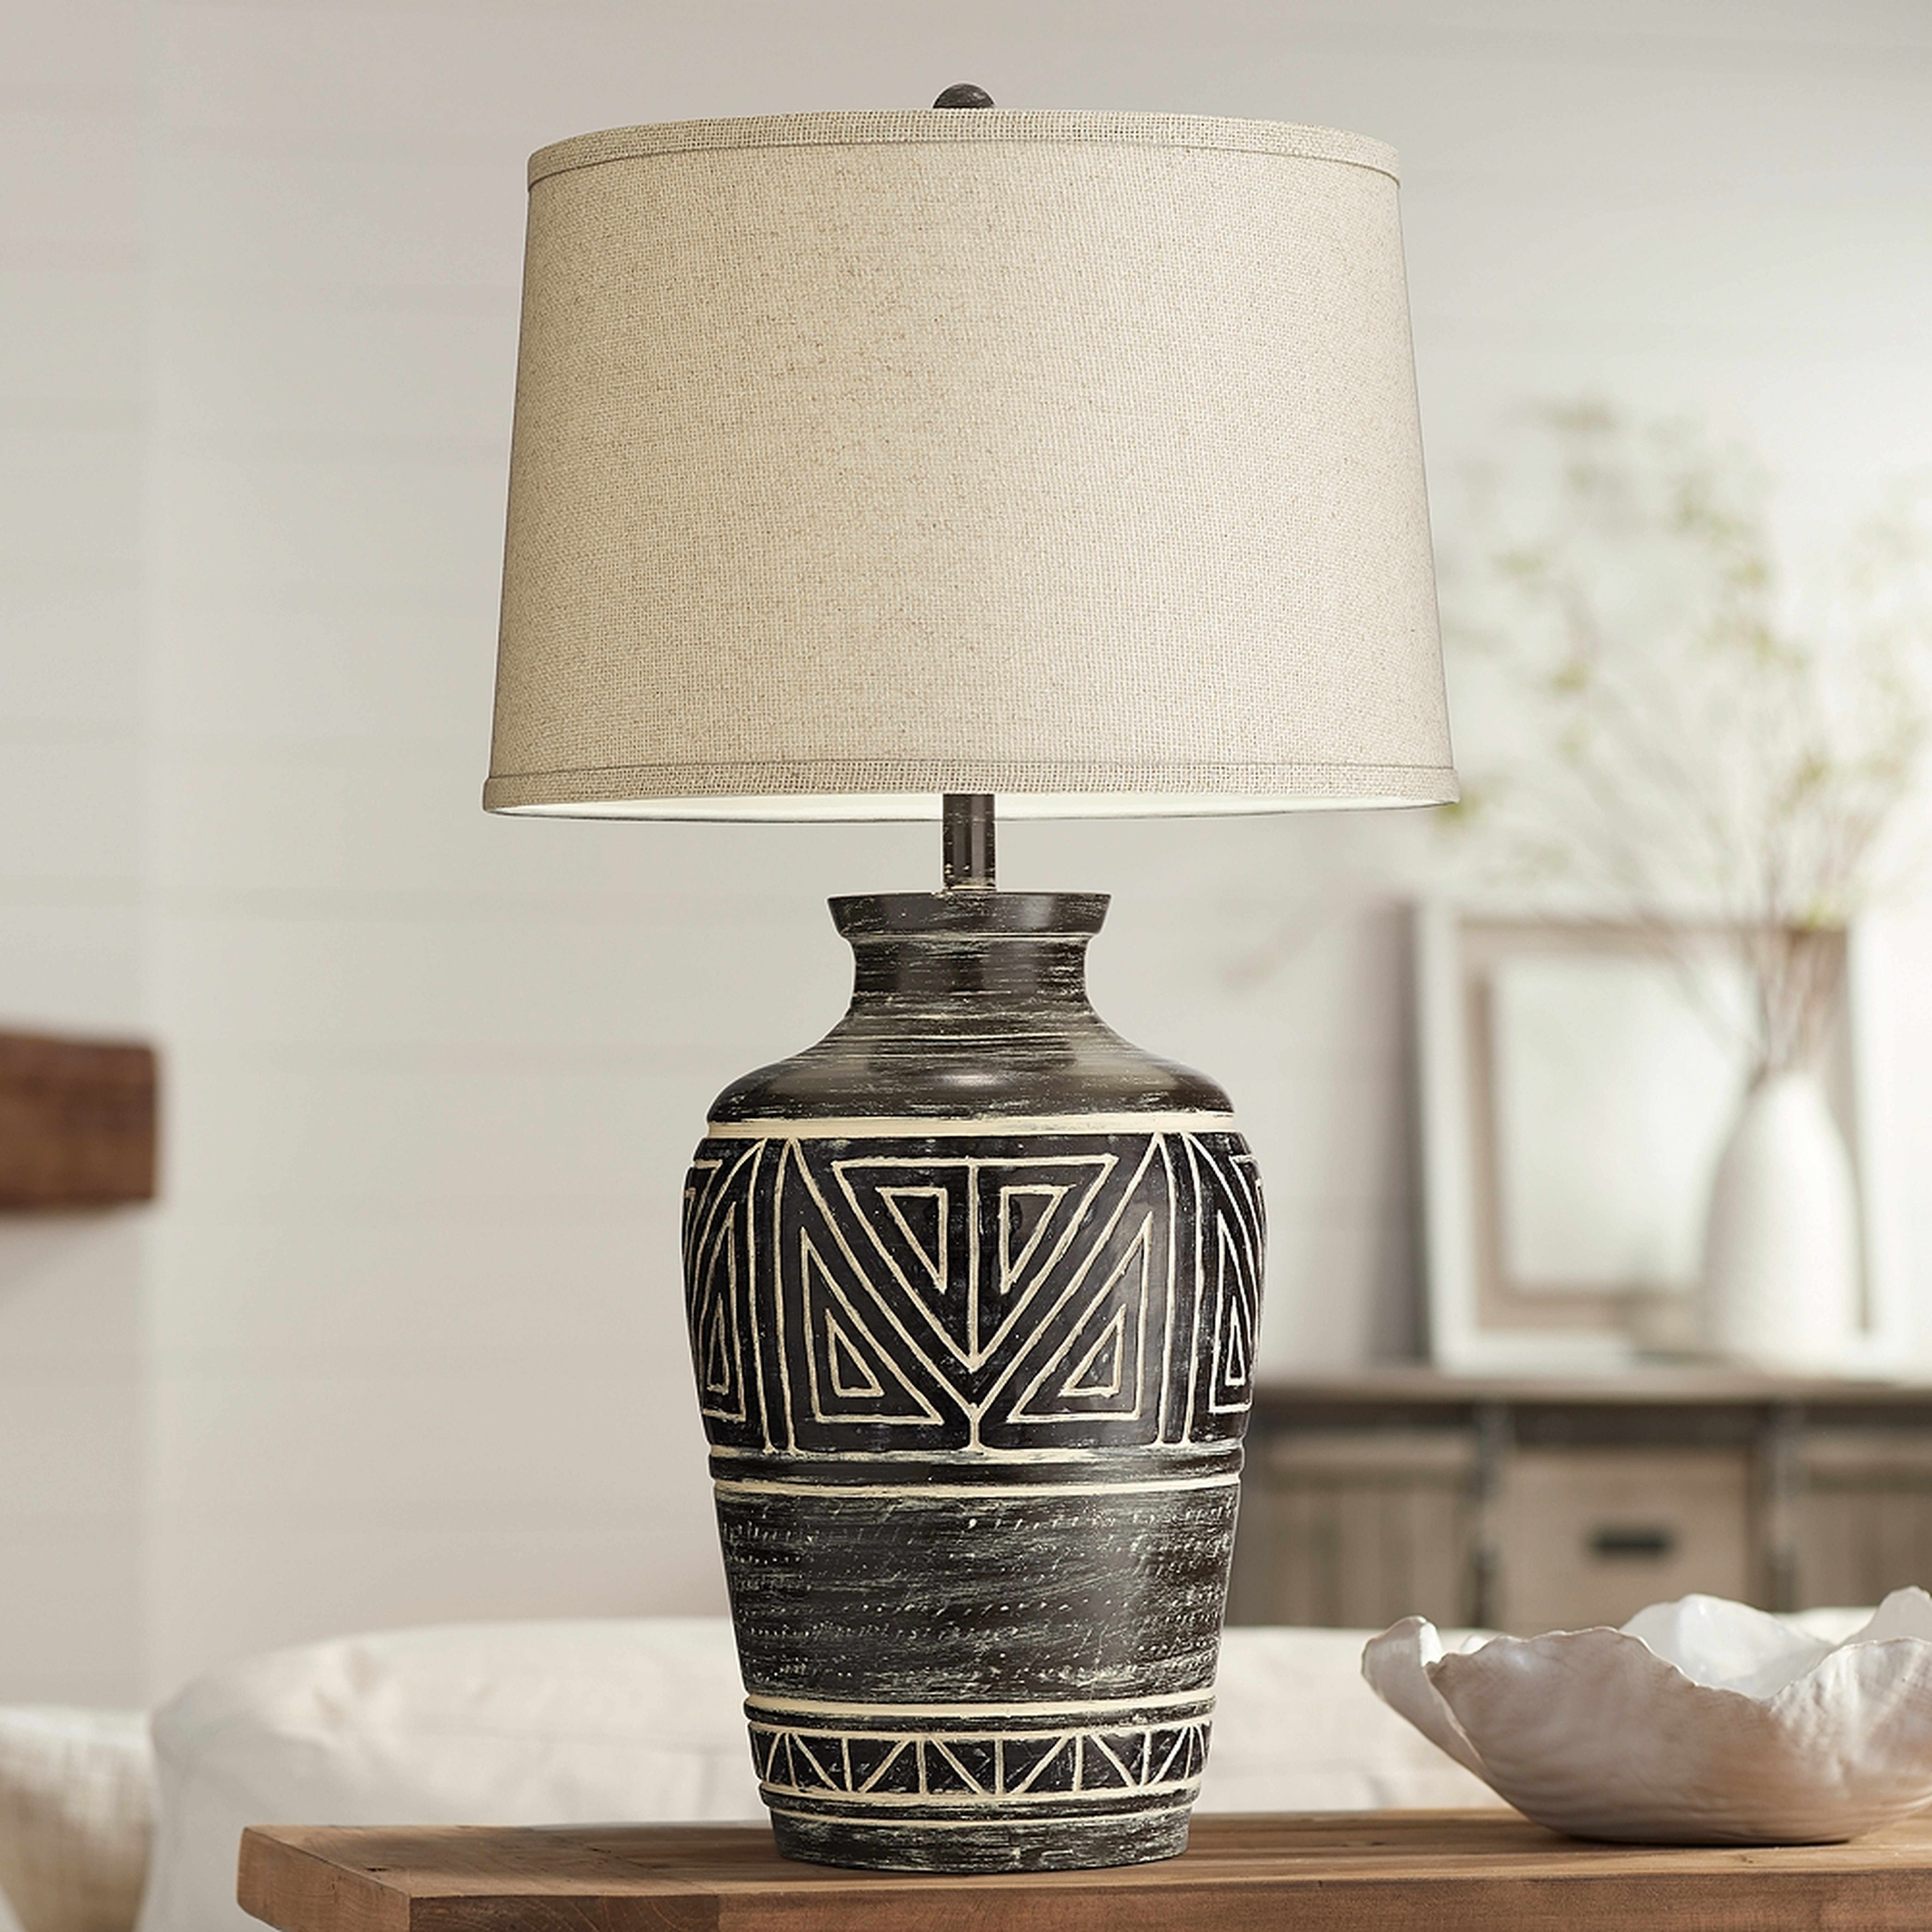 Miguel Earth Tone Southwest Rustic Jar Table Lamp - Style # 72M43 - Lamps Plus